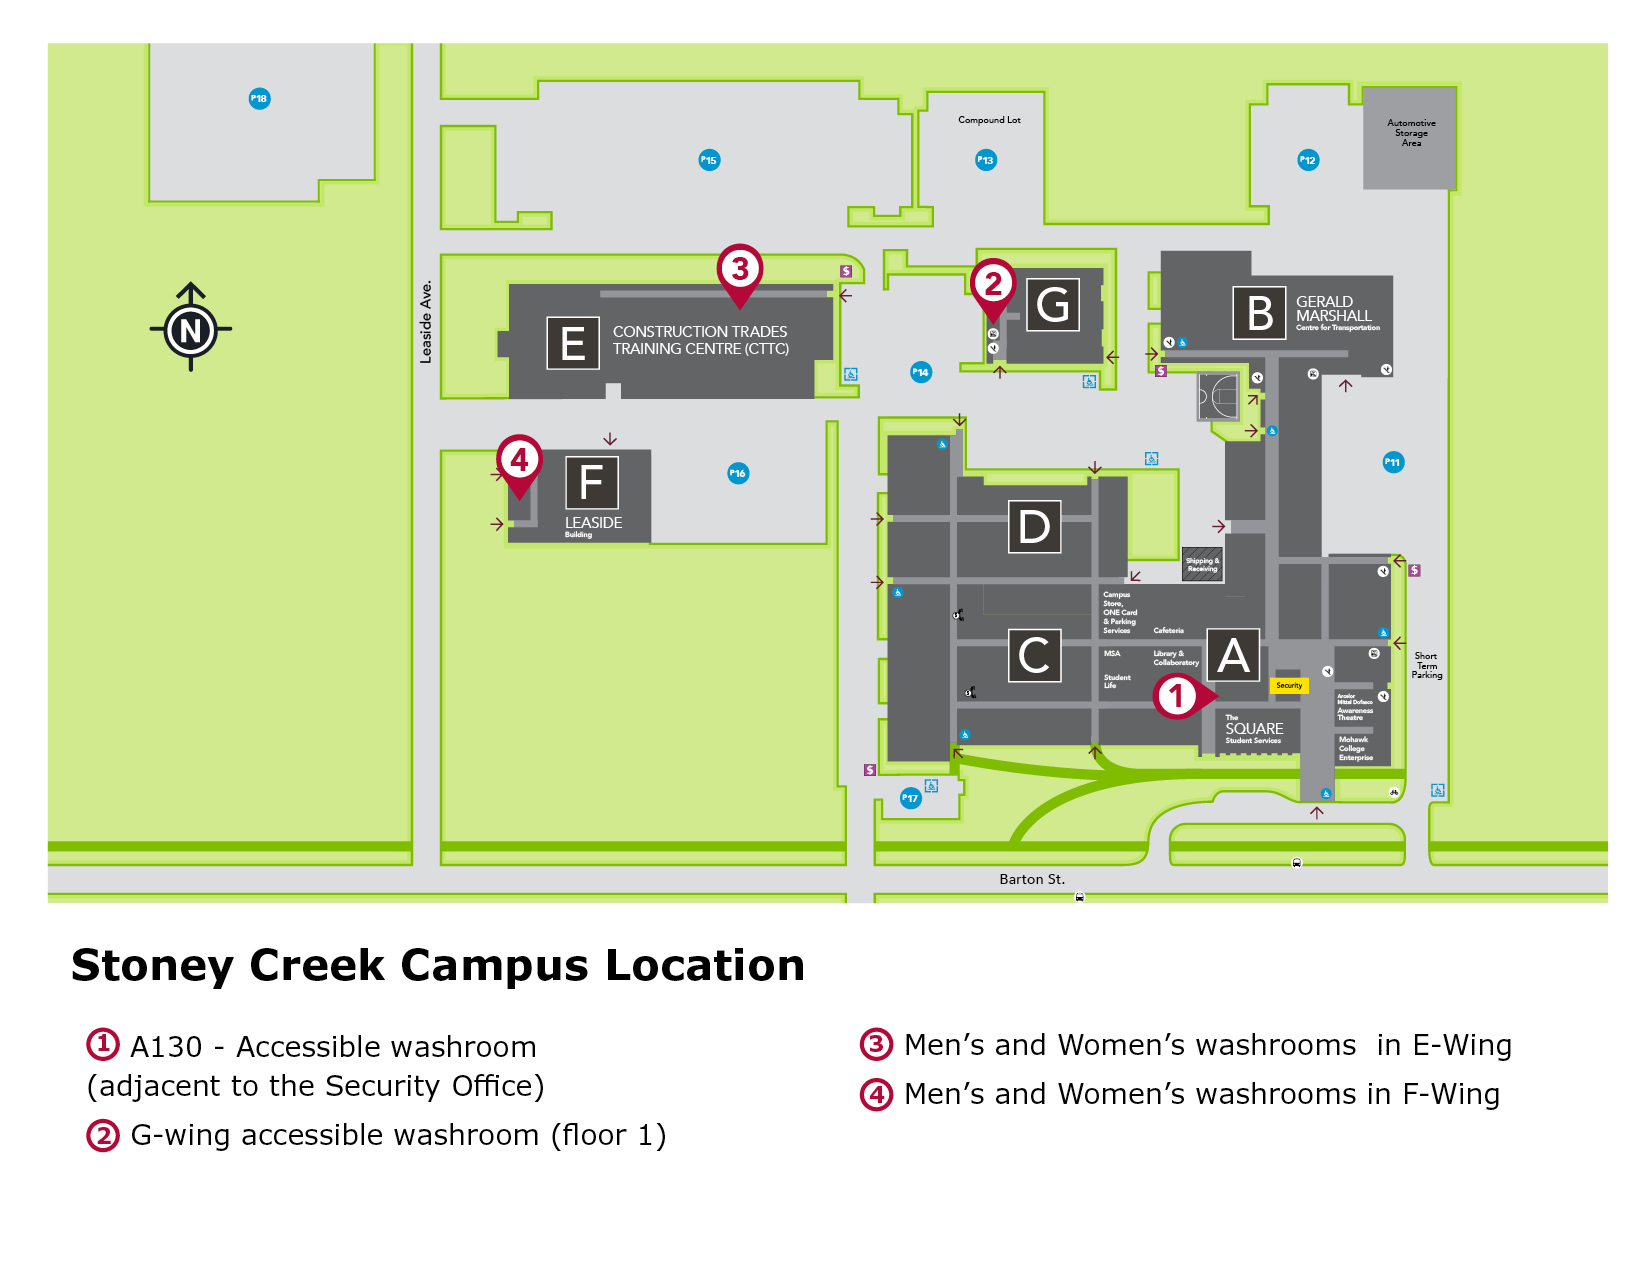 Mohawk college Stoney creek campus sharps disposal location map